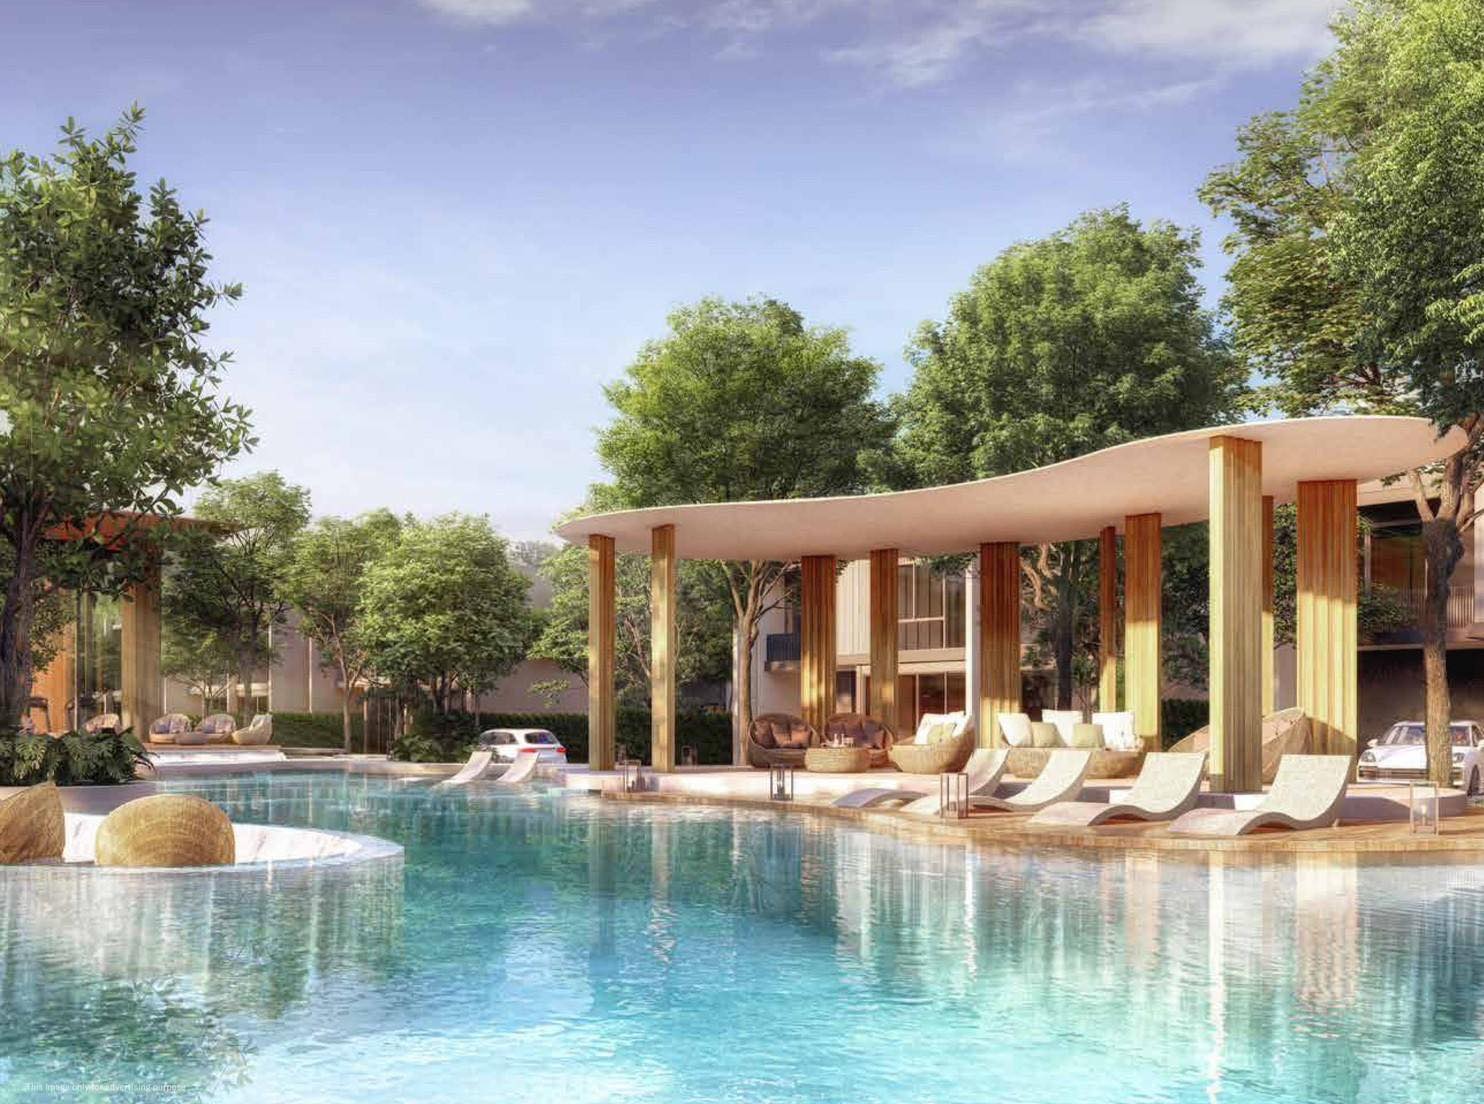 Highland Park Pool Villas. 4 bedrooms pool Villa modern style. Start price 8.6 m baht